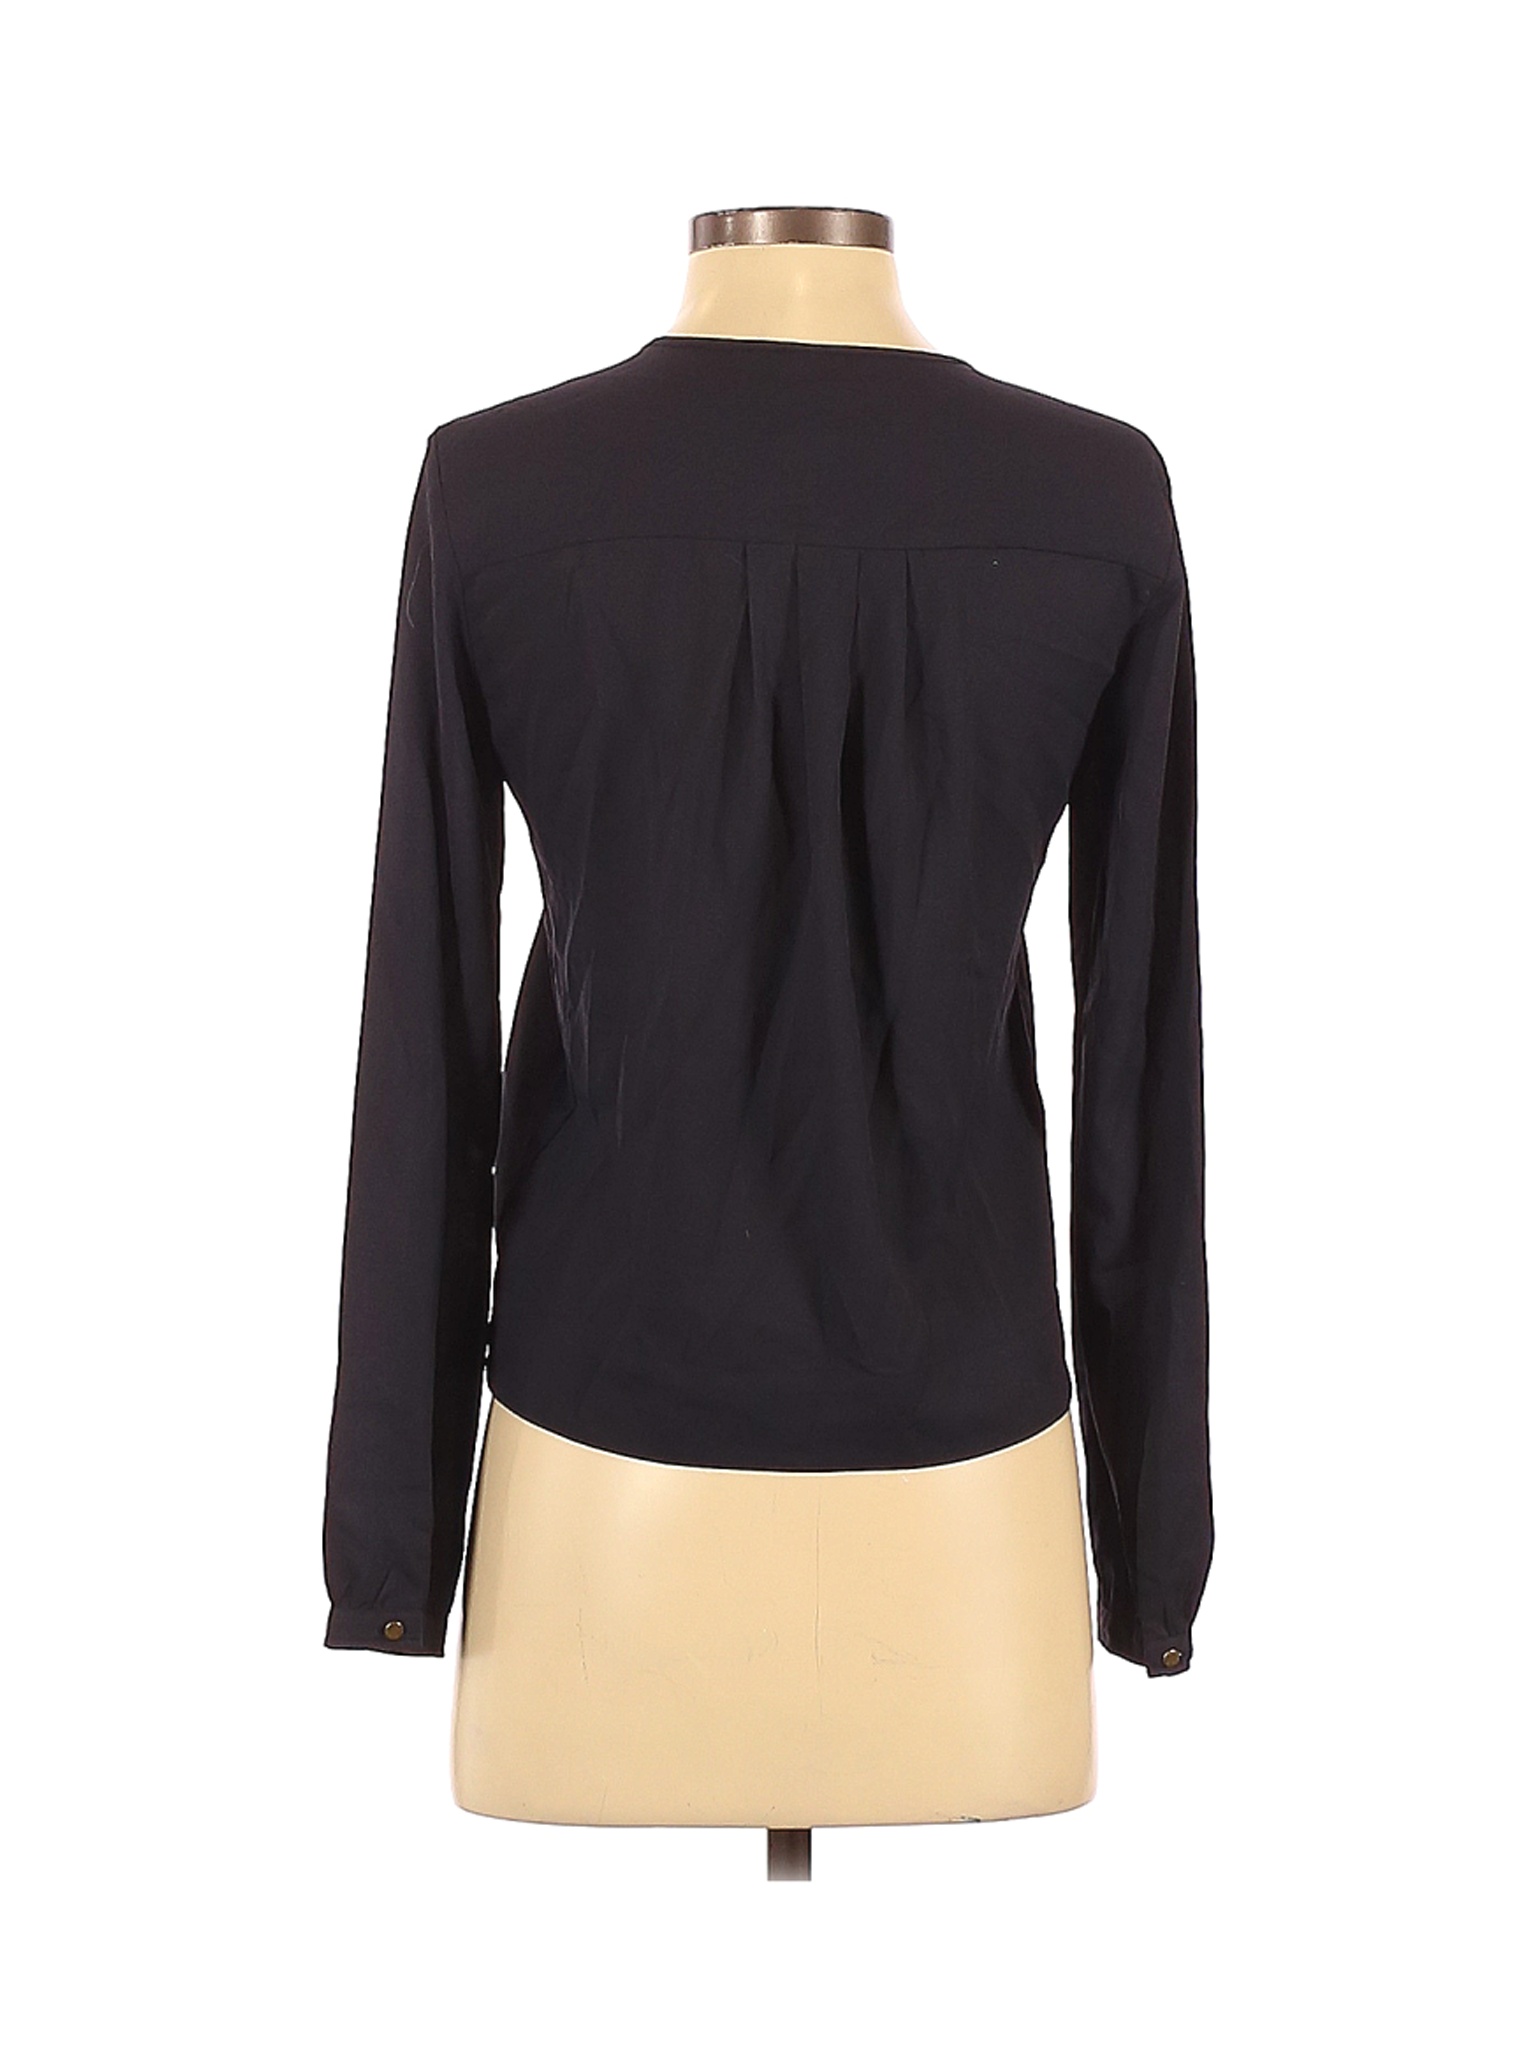 H&M Women Black Long Sleeve Blouse 2 | eBay